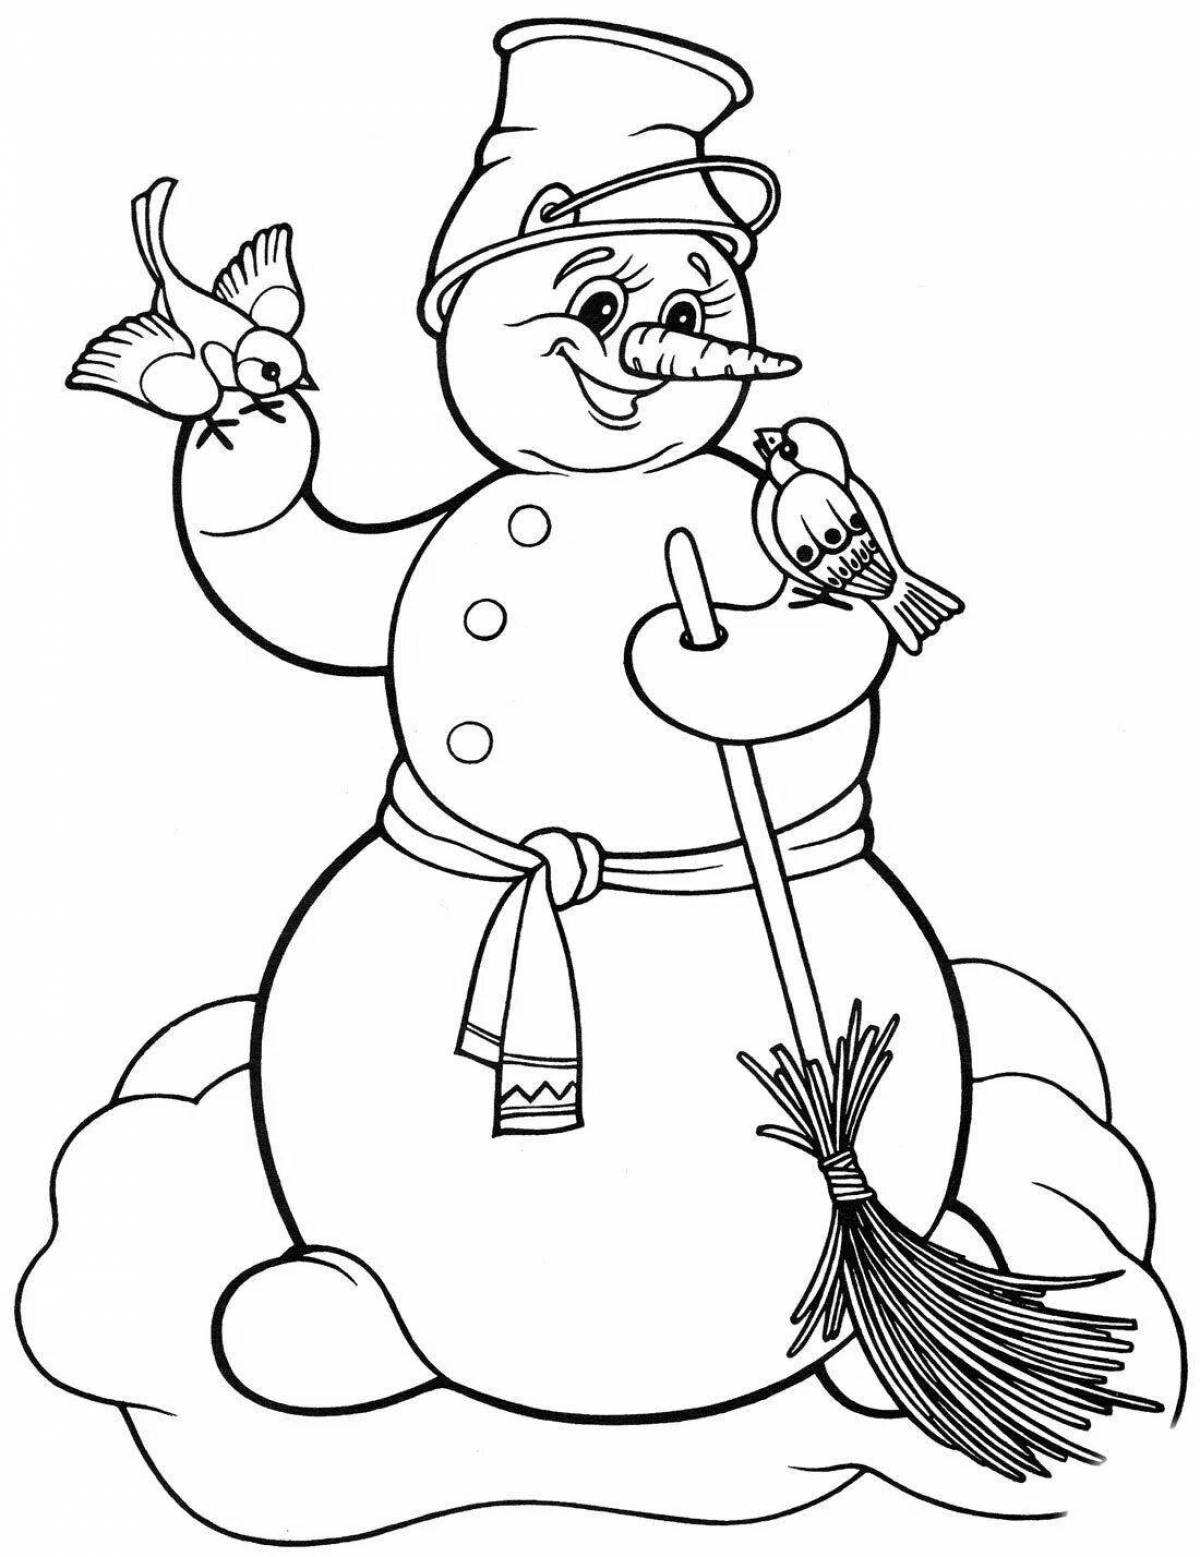 Happy snowman coloring book